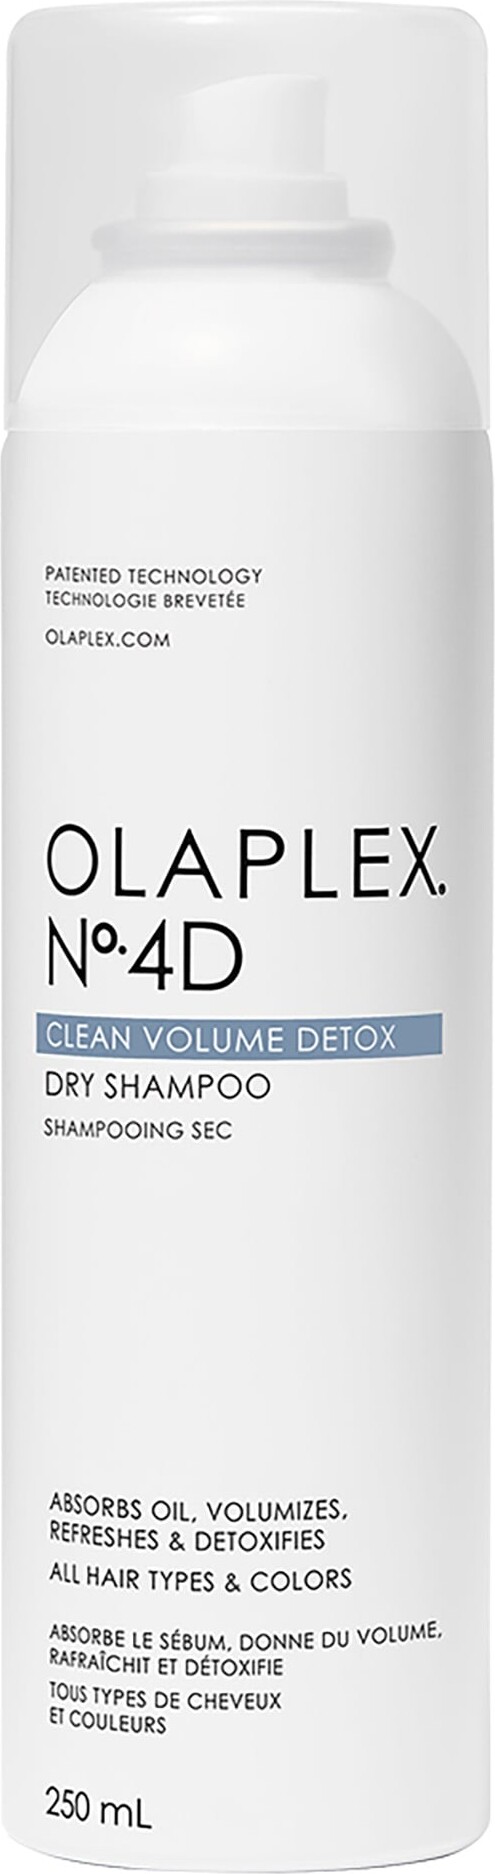 Se Olaplex - No. 4d Clean Volume Detox Dry Shampoo 178 Ml hos Gucca.dk